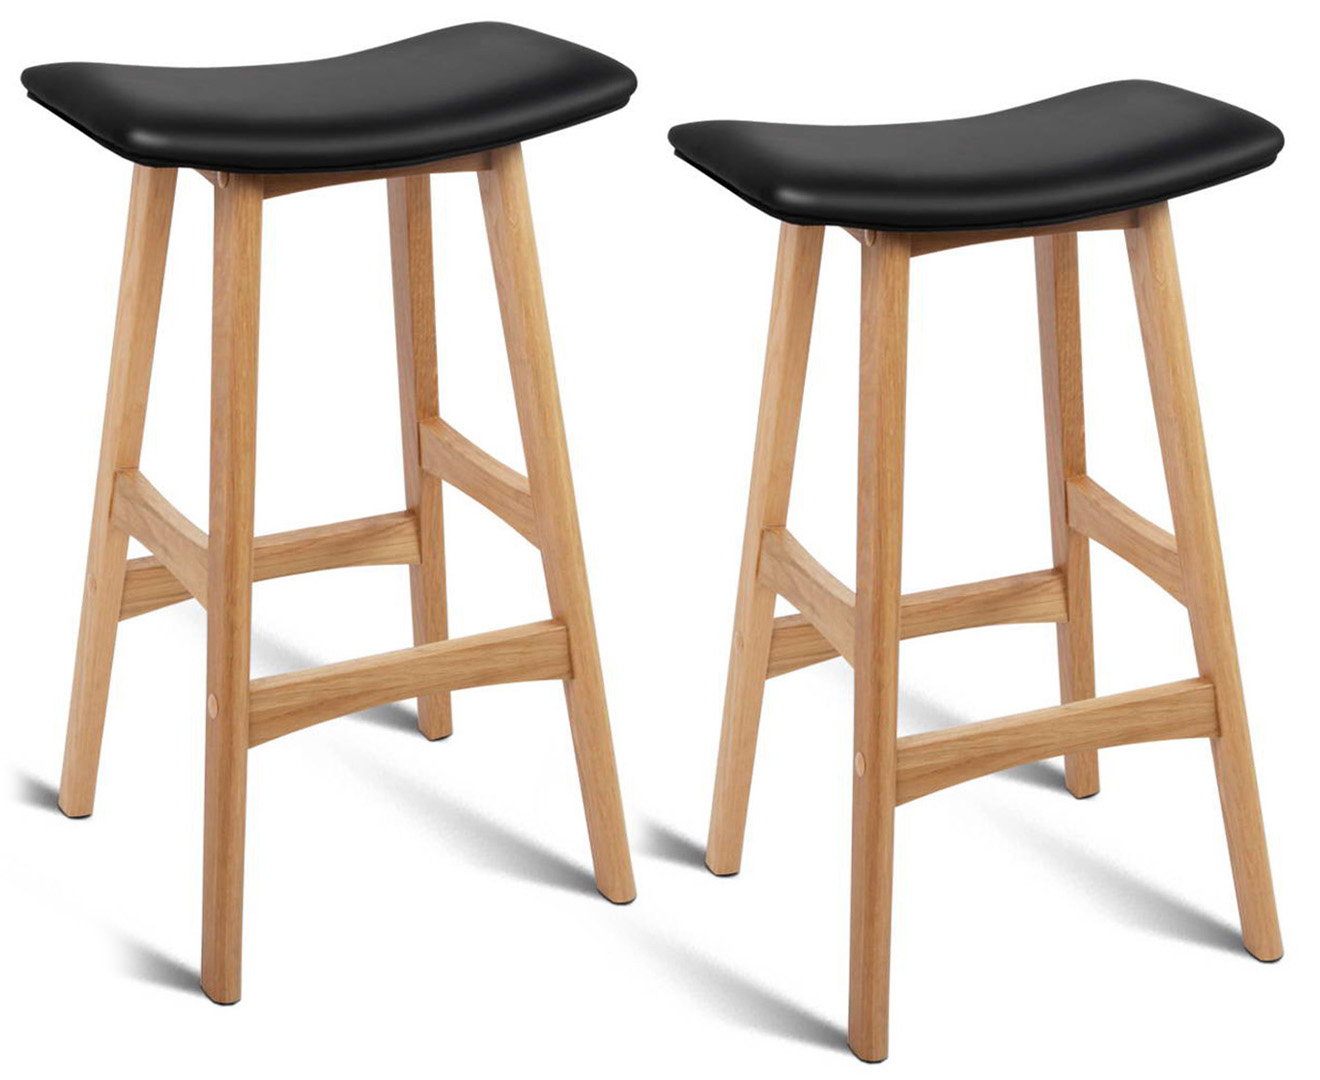 28 inch kitchen bar stools backless